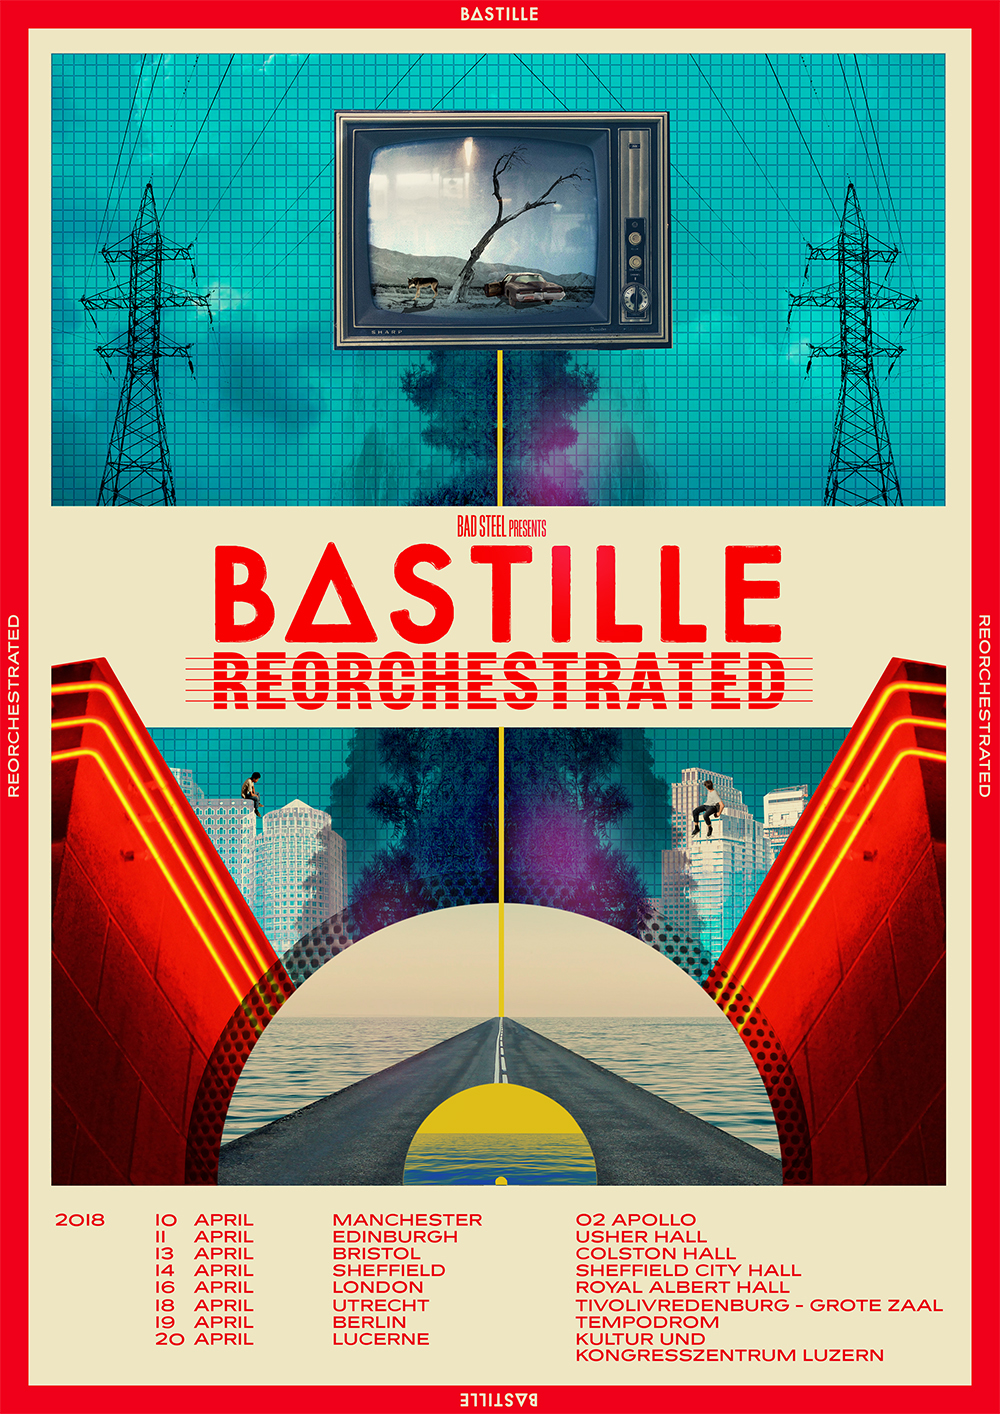 Bastille UK tour Full show details + how to get tickets